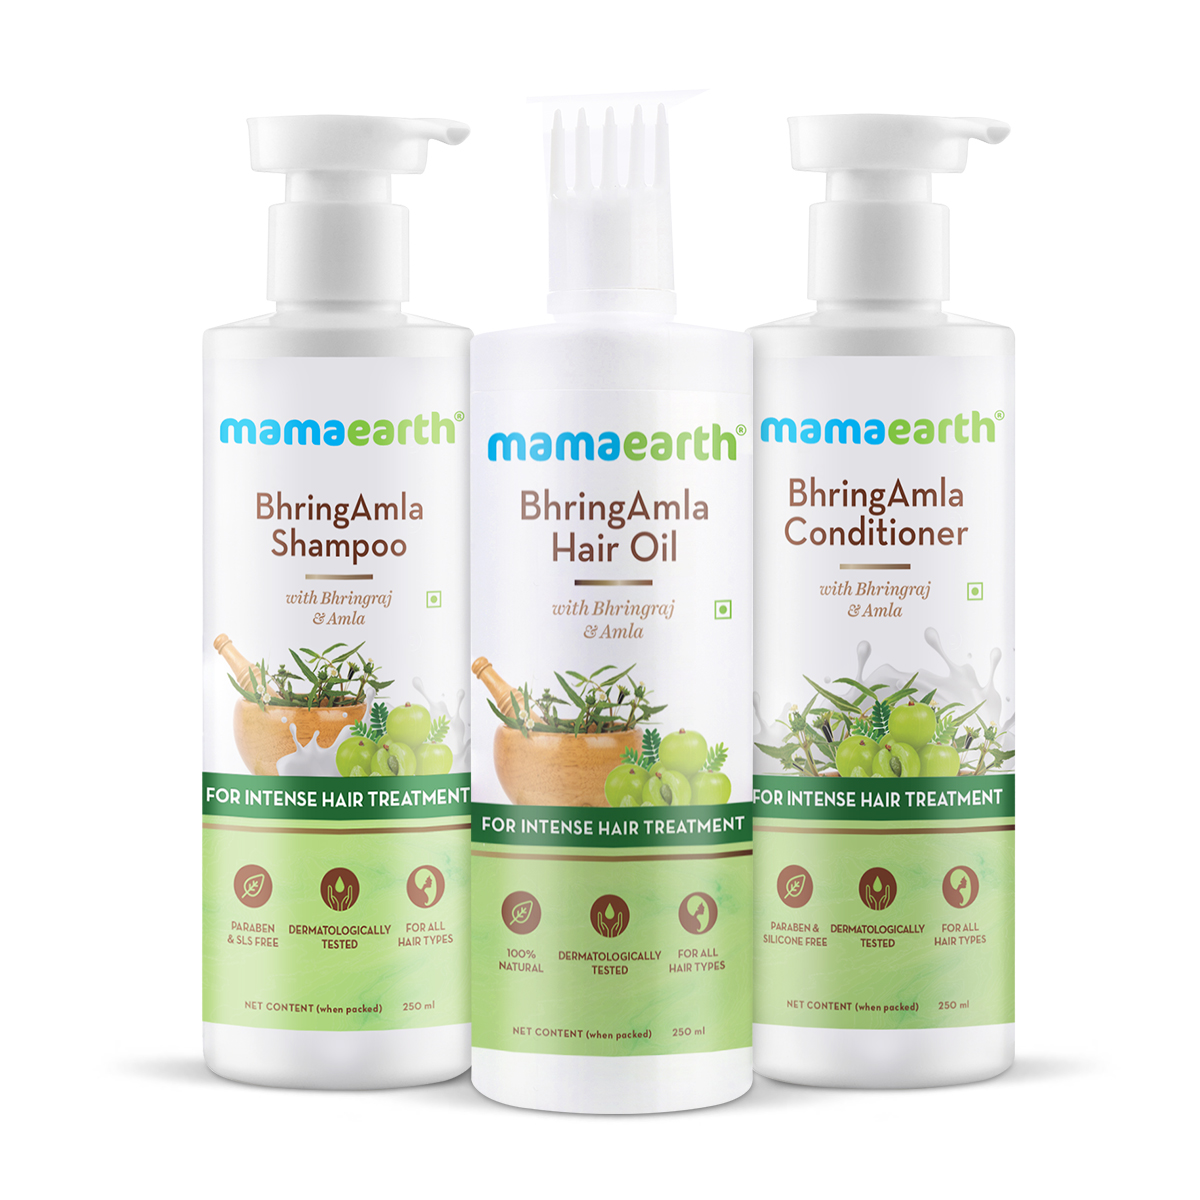 mamaearth hair care kit